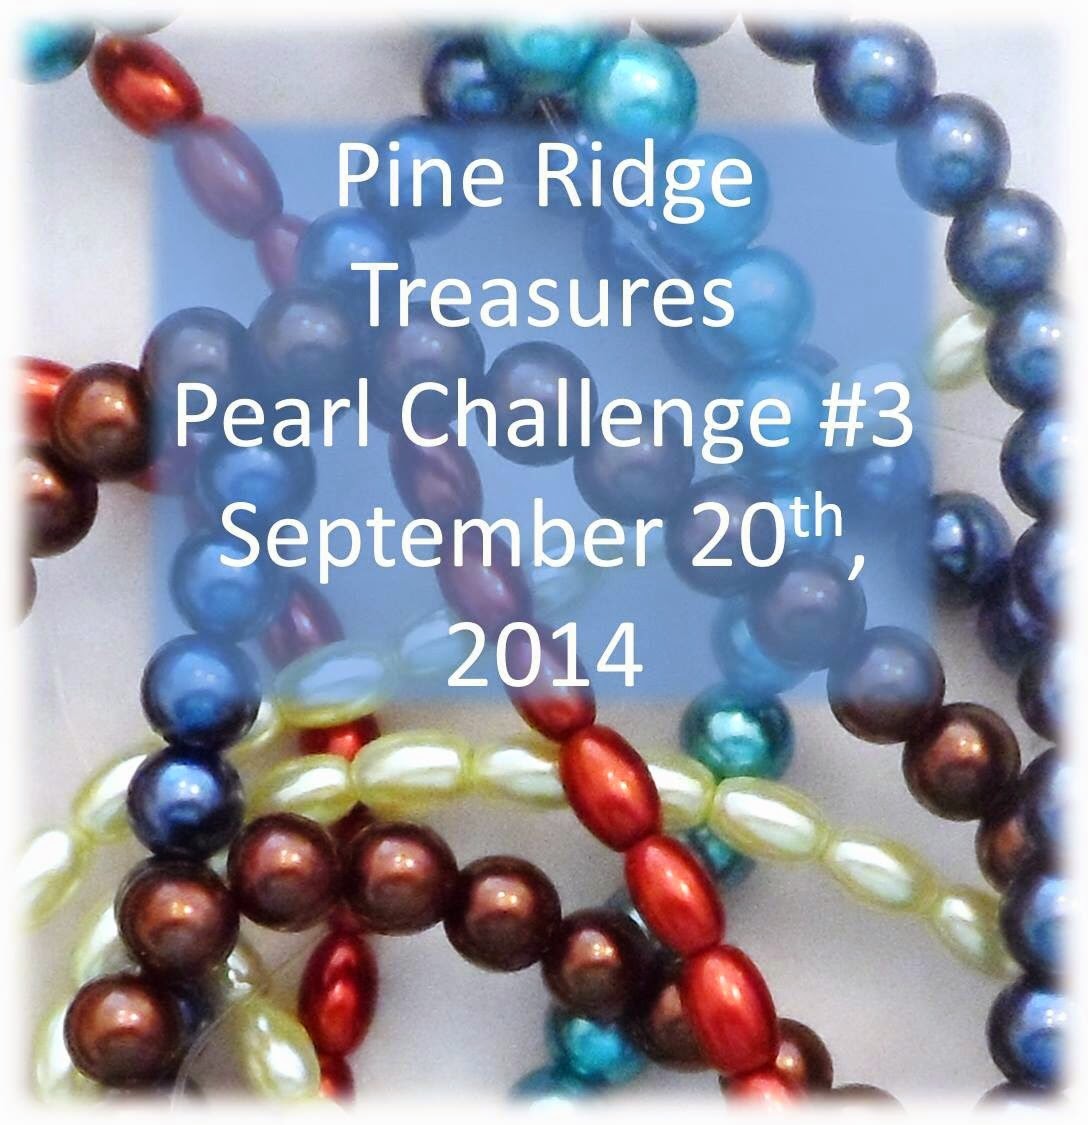 Pearl Challenge #3